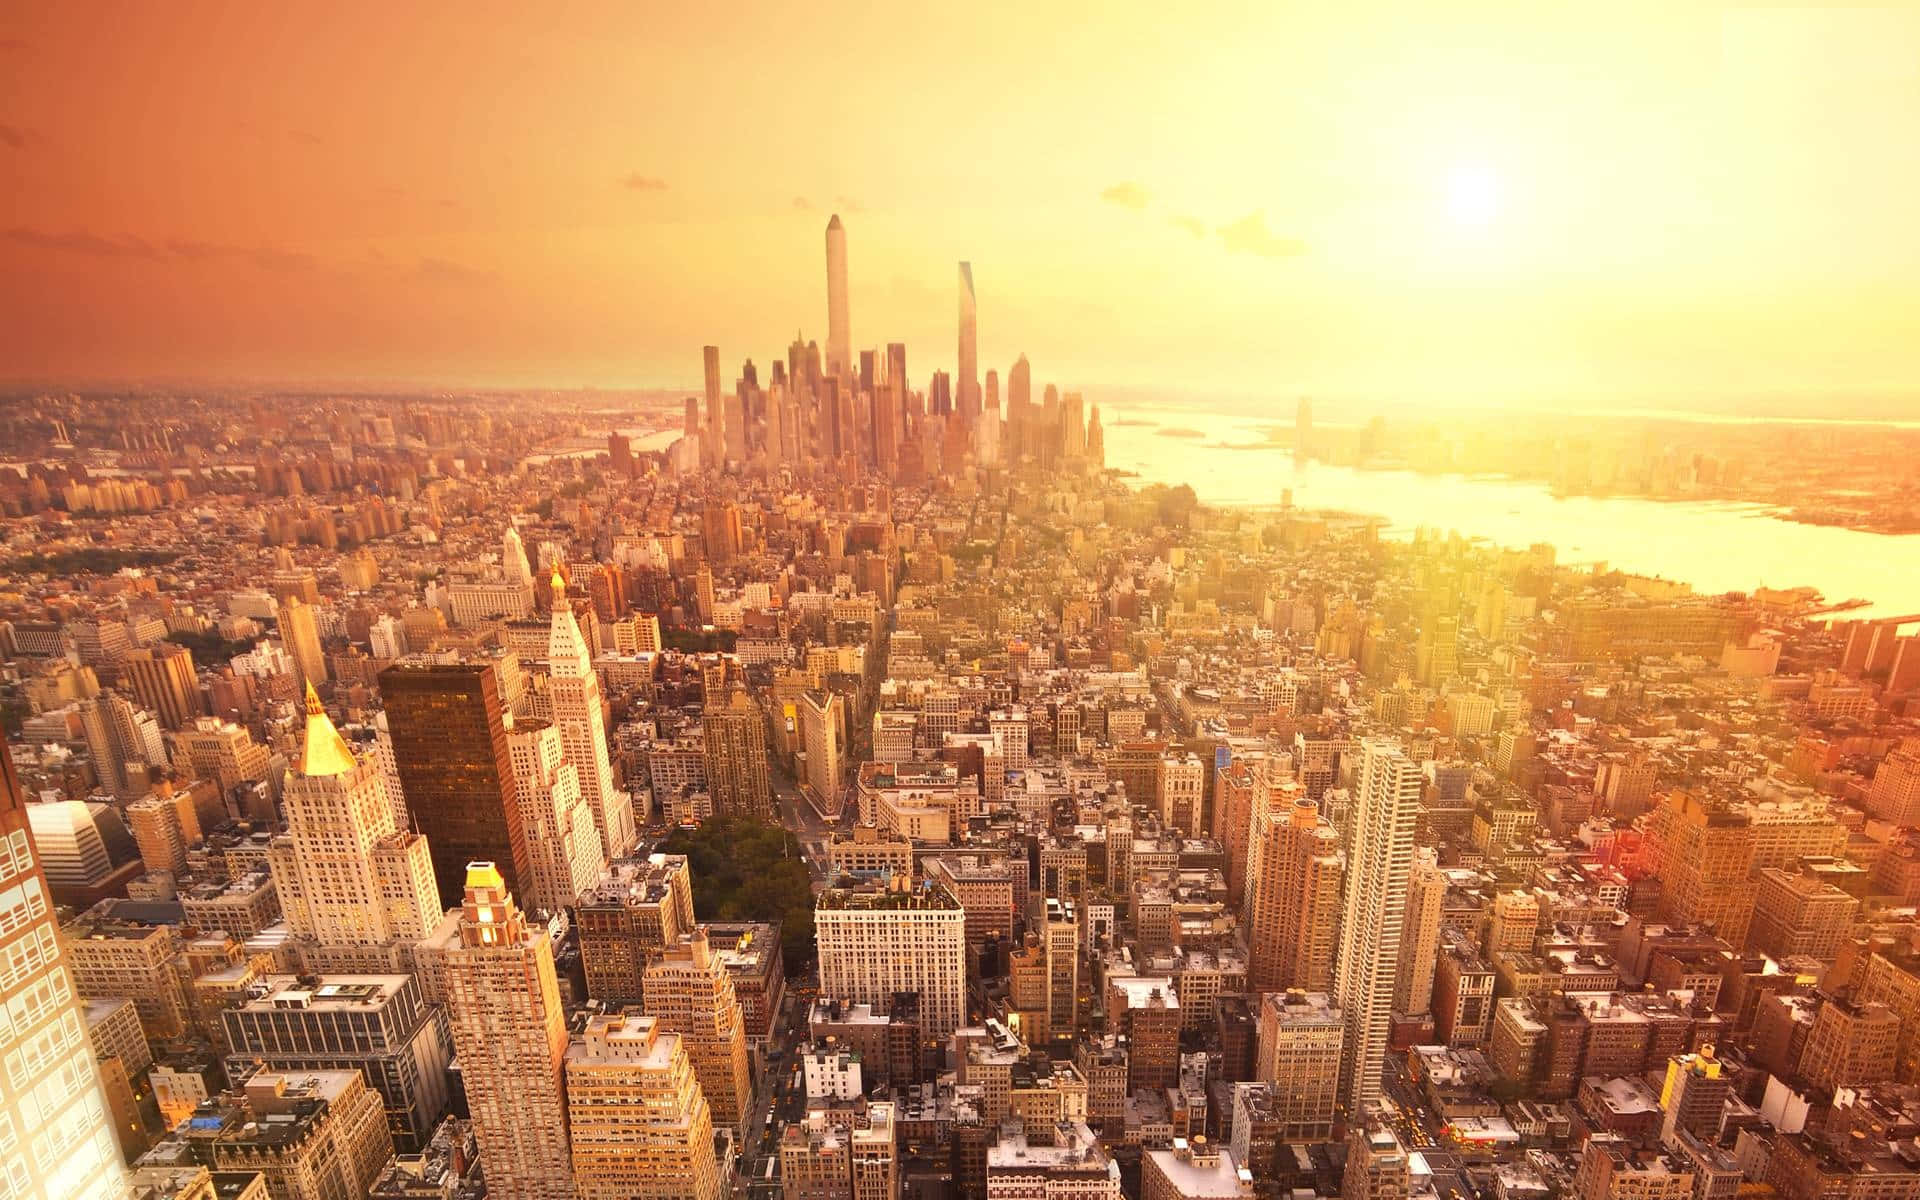 New York City's iconic skyline at sunset